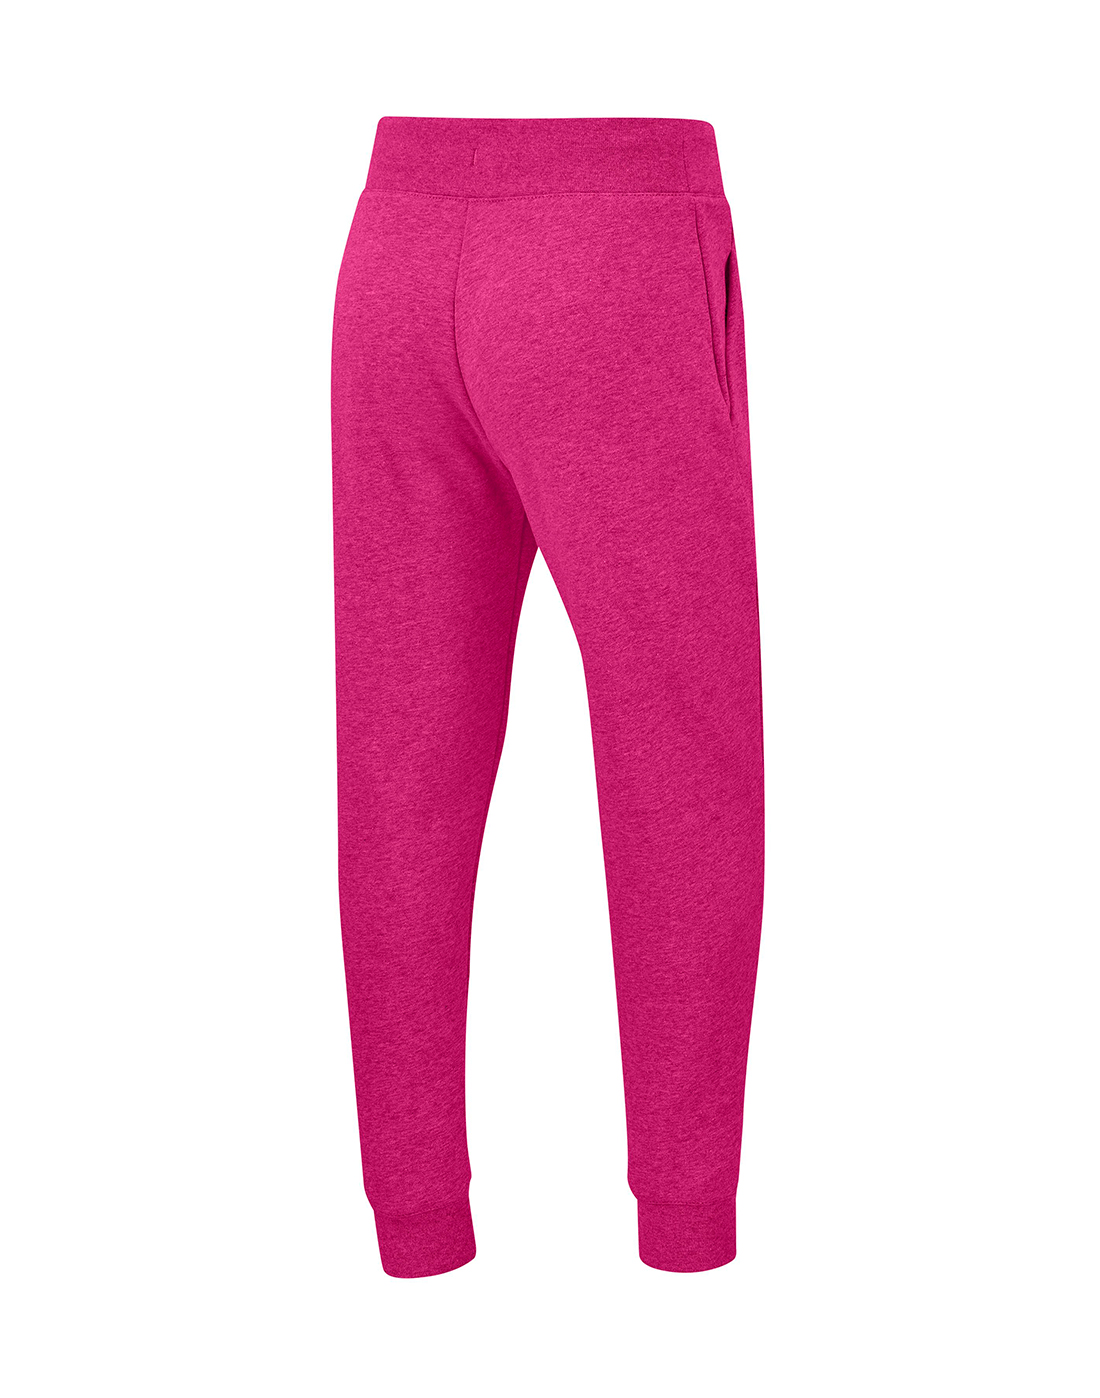 Nike Older Girls PE Pants - Pink | Life Style Sports IE